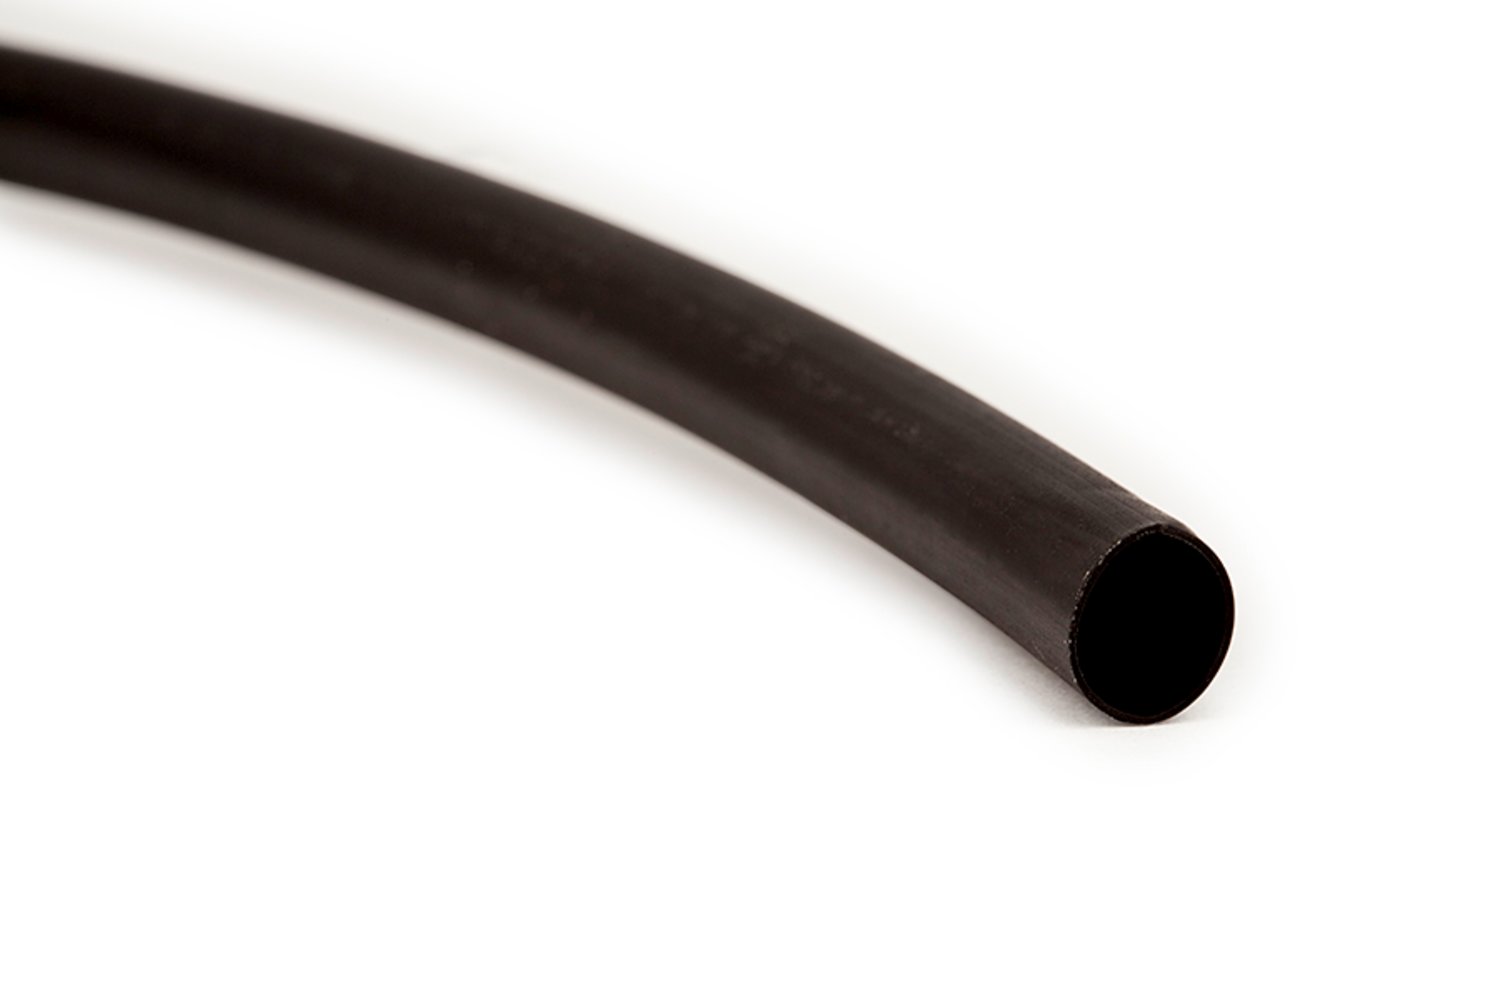 7100030674 - 3M Modified Fluoroelastomer Tubing VTN-200-1 1/2-Black, 50 ft Length
per spool, 1 spool per carton, 1 Roll/Case